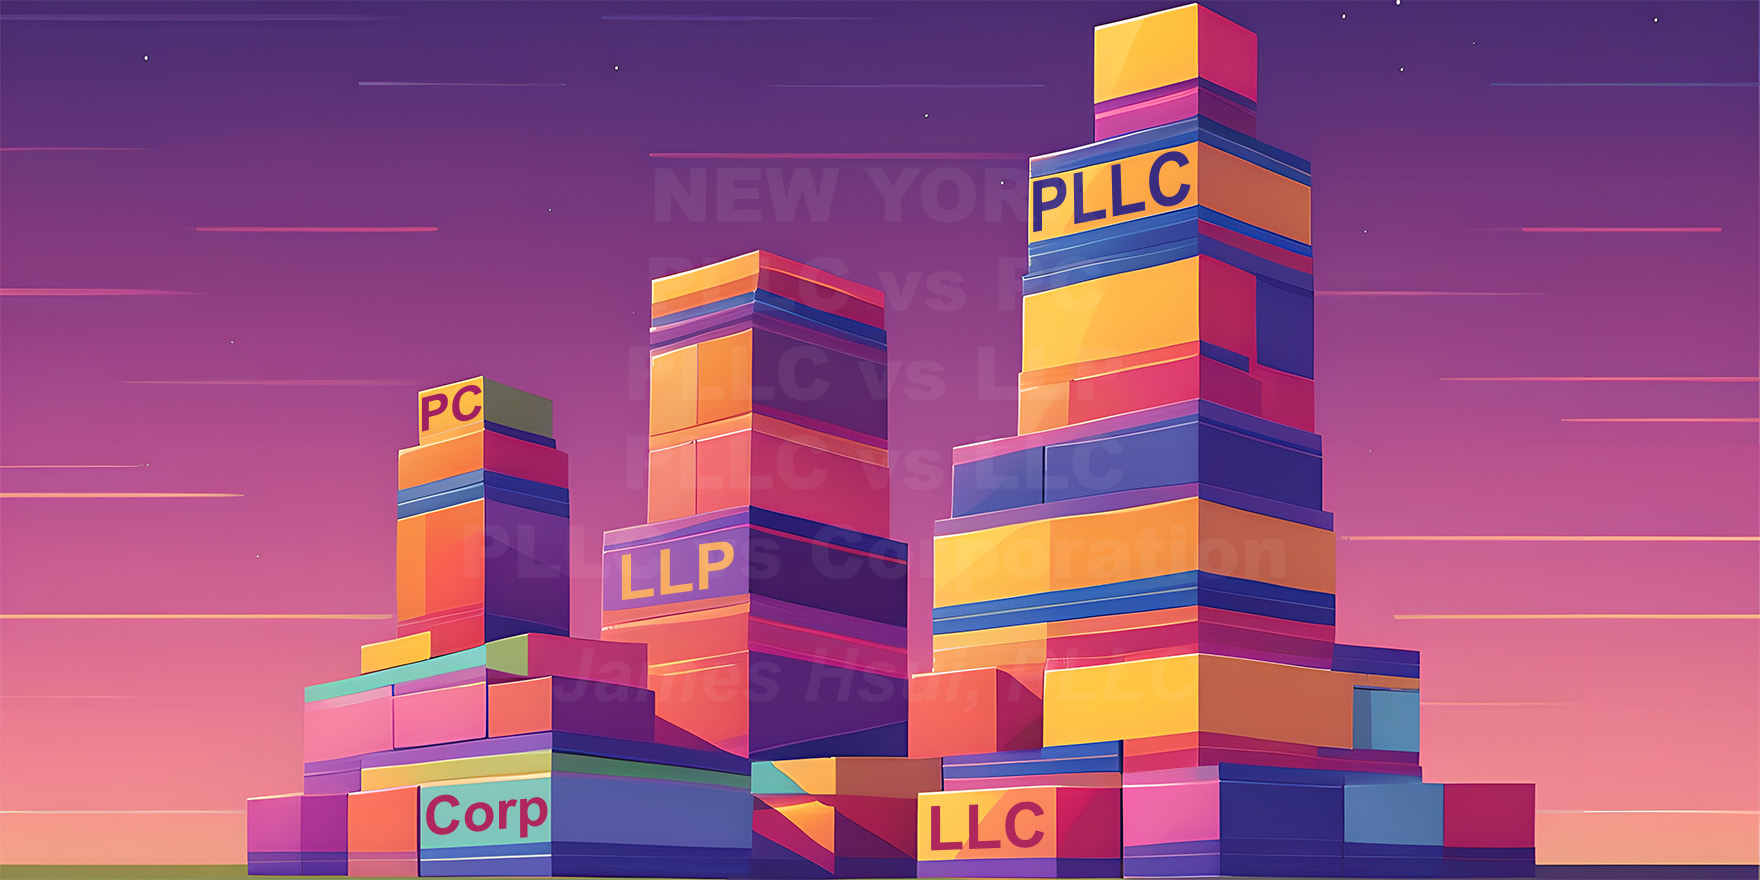 'New York PLLC vs PC, PLLC vs LLP, PLLC vs LLC, PLLC vs Corporation' superimposed on three building block towers with 'PLLC' as the highest block, 'PC' as the next, 'LLP' as the next, and 'LLC' and 'Corp' as the lowest.